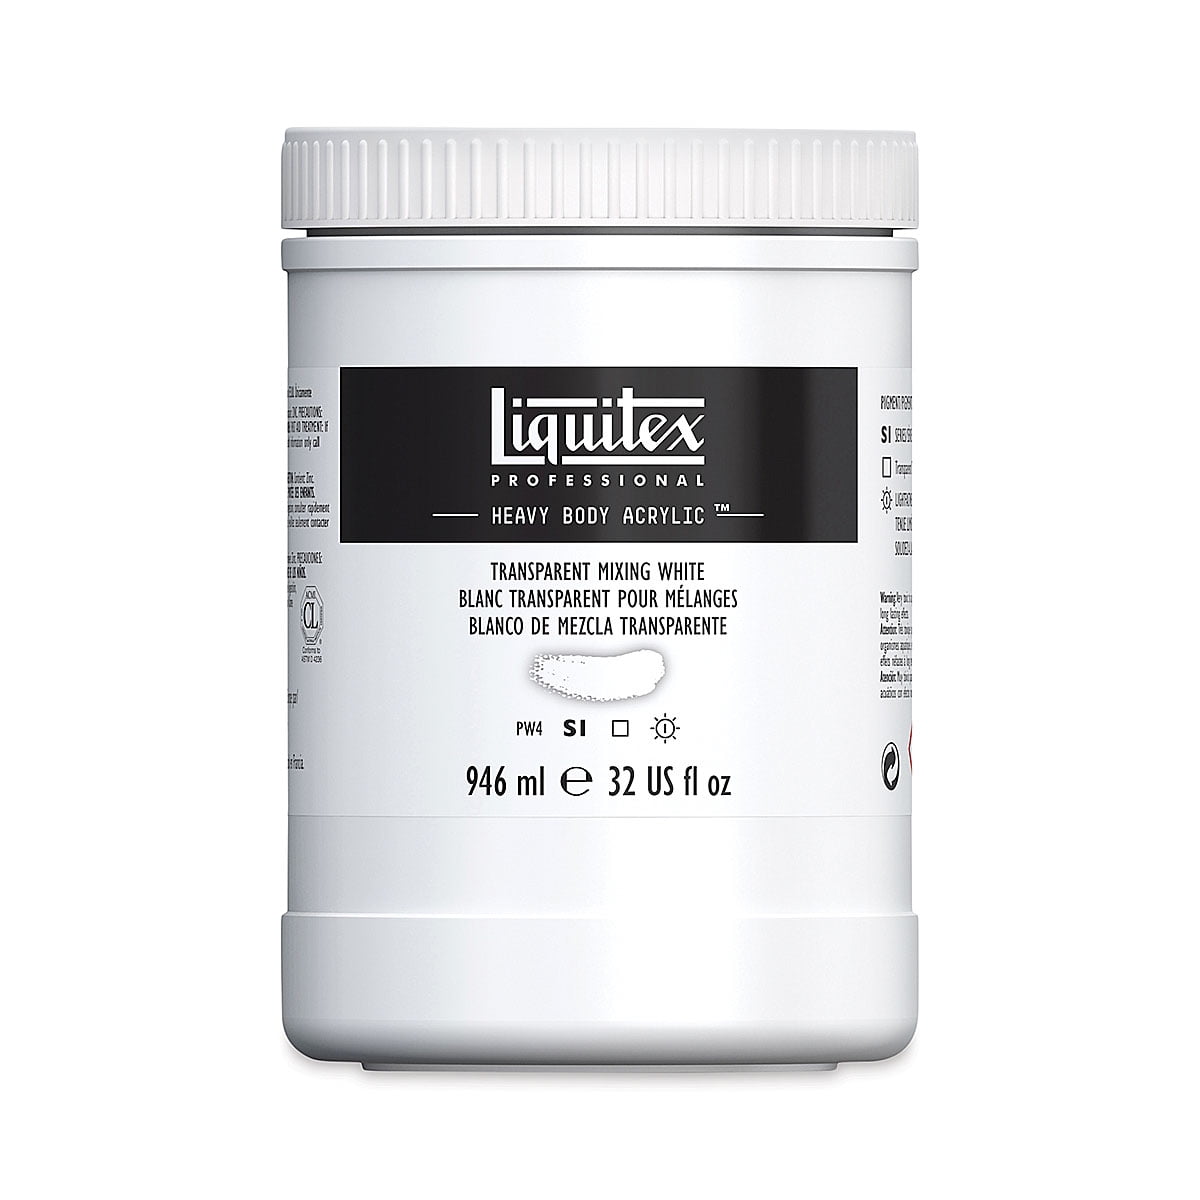 Liquitex | Heavy Body Acrylic 2oz Transparent Mixing White